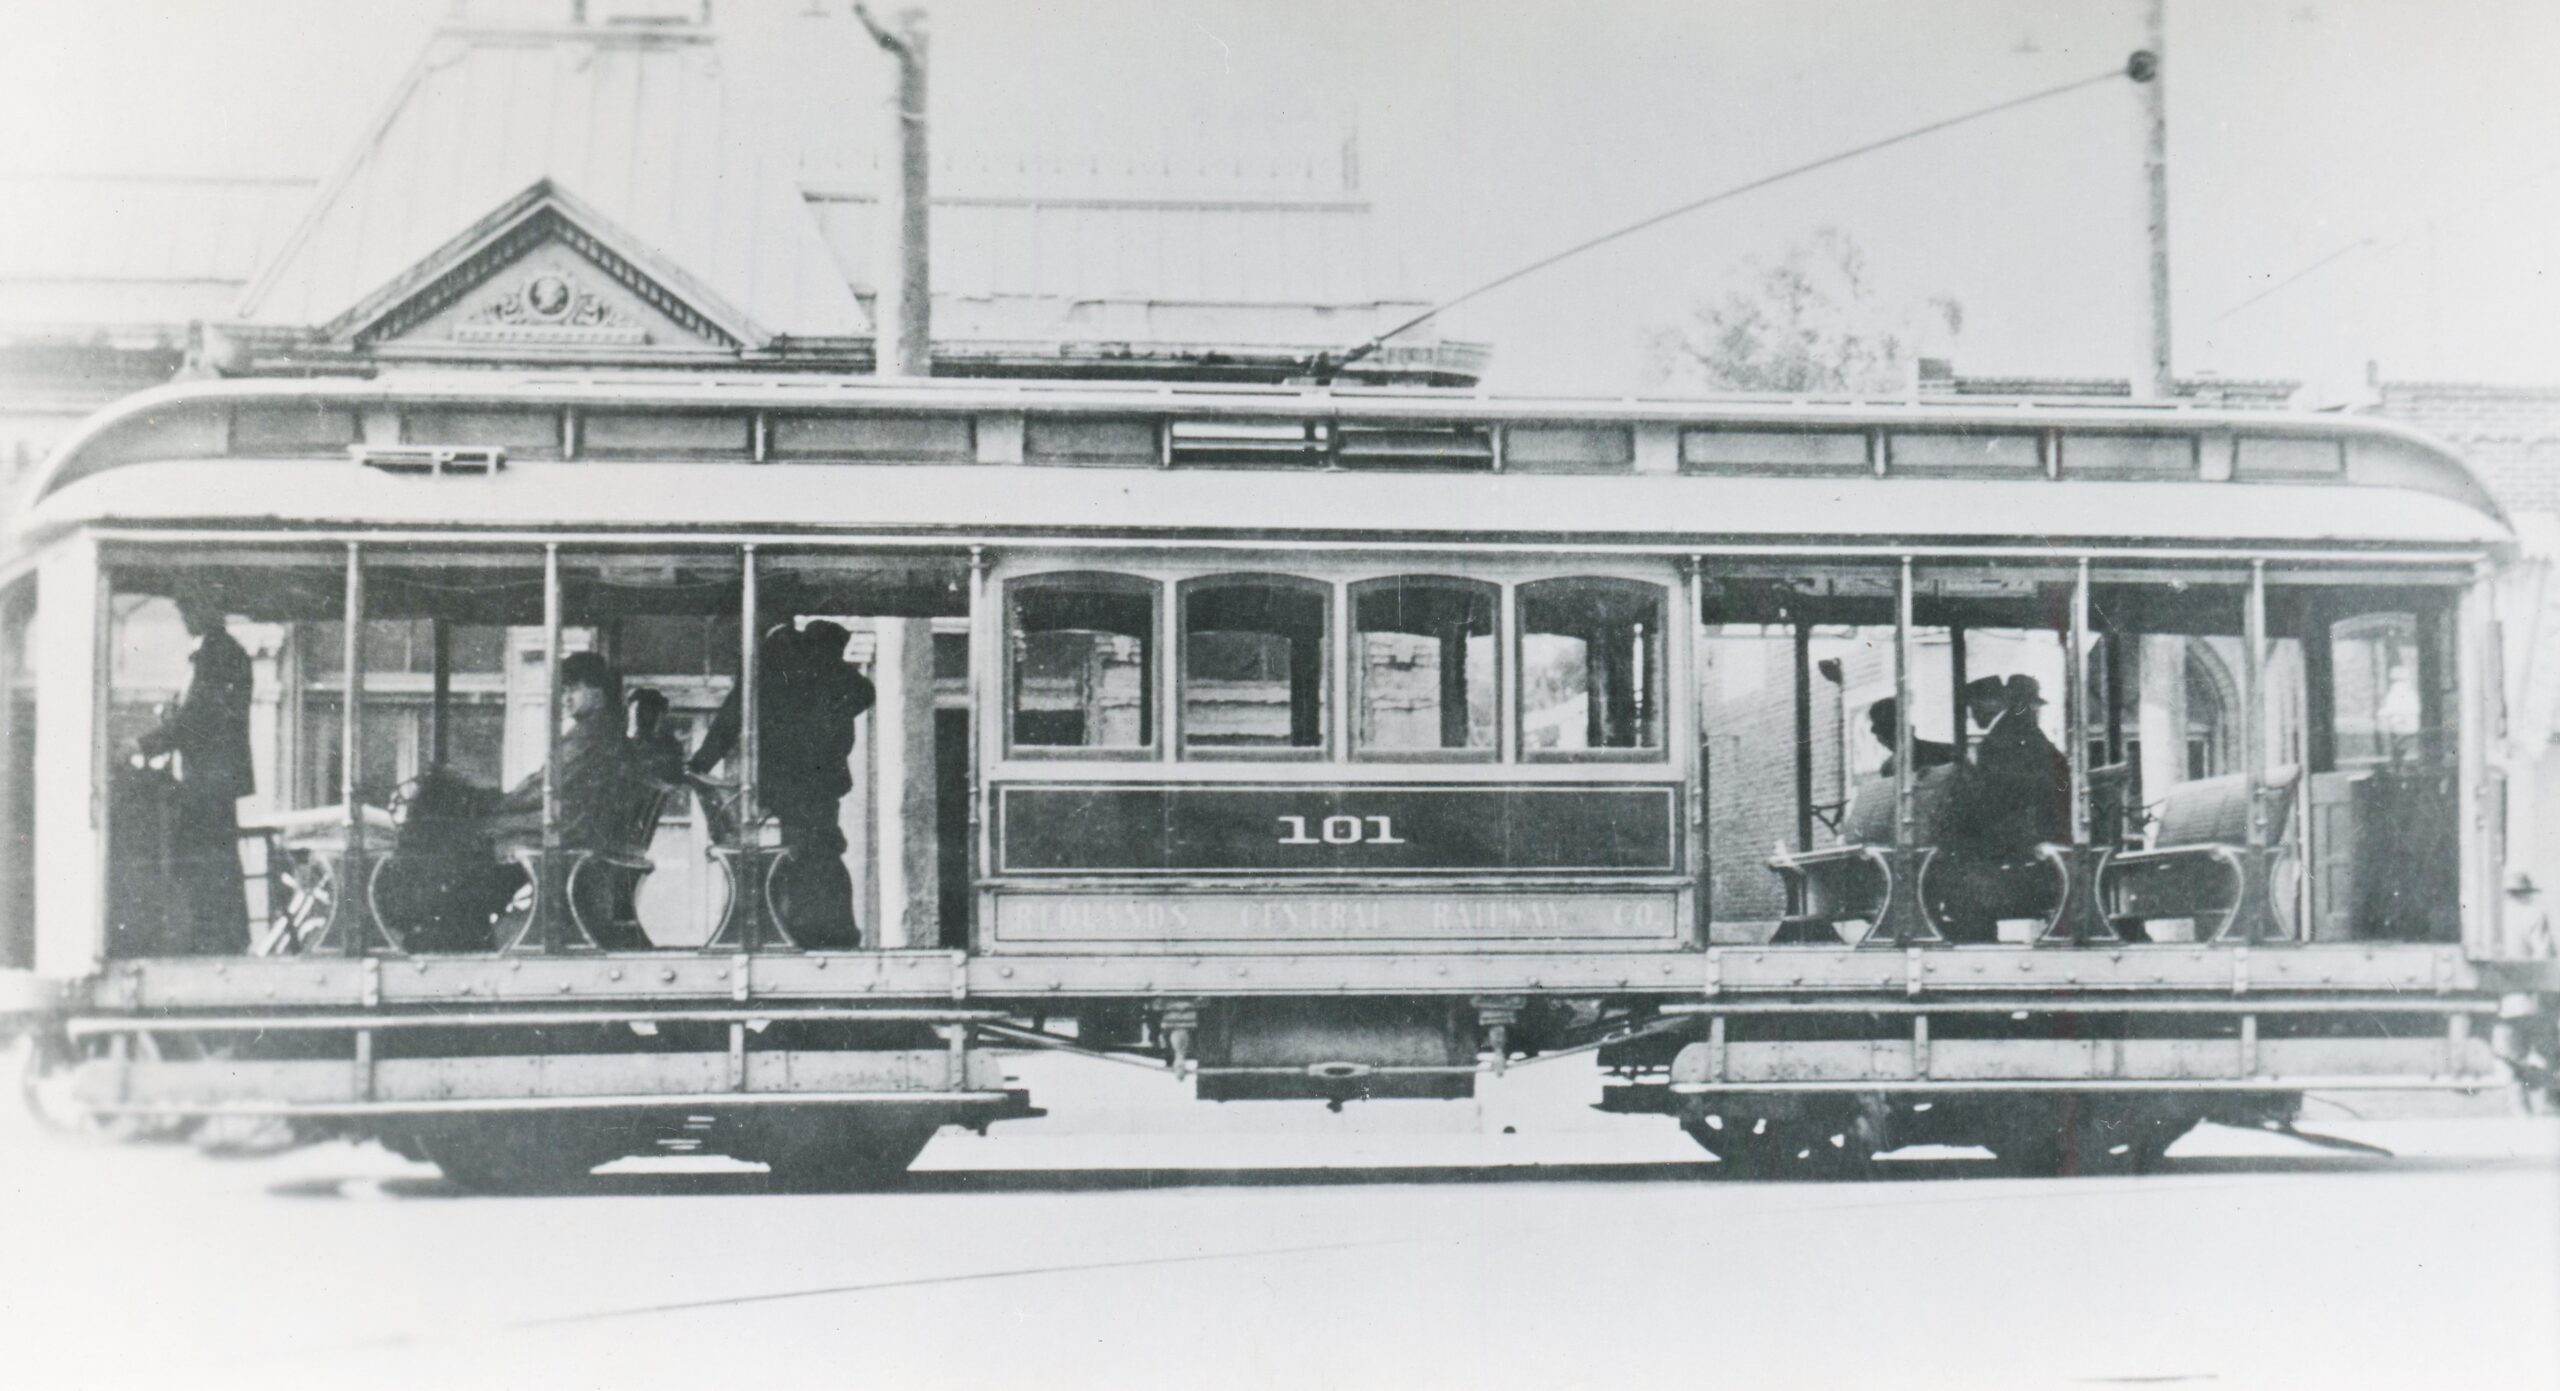 Redland Central Railway | Redland, California | Car 101 | 1907 | Stuart A Liebman photo collection